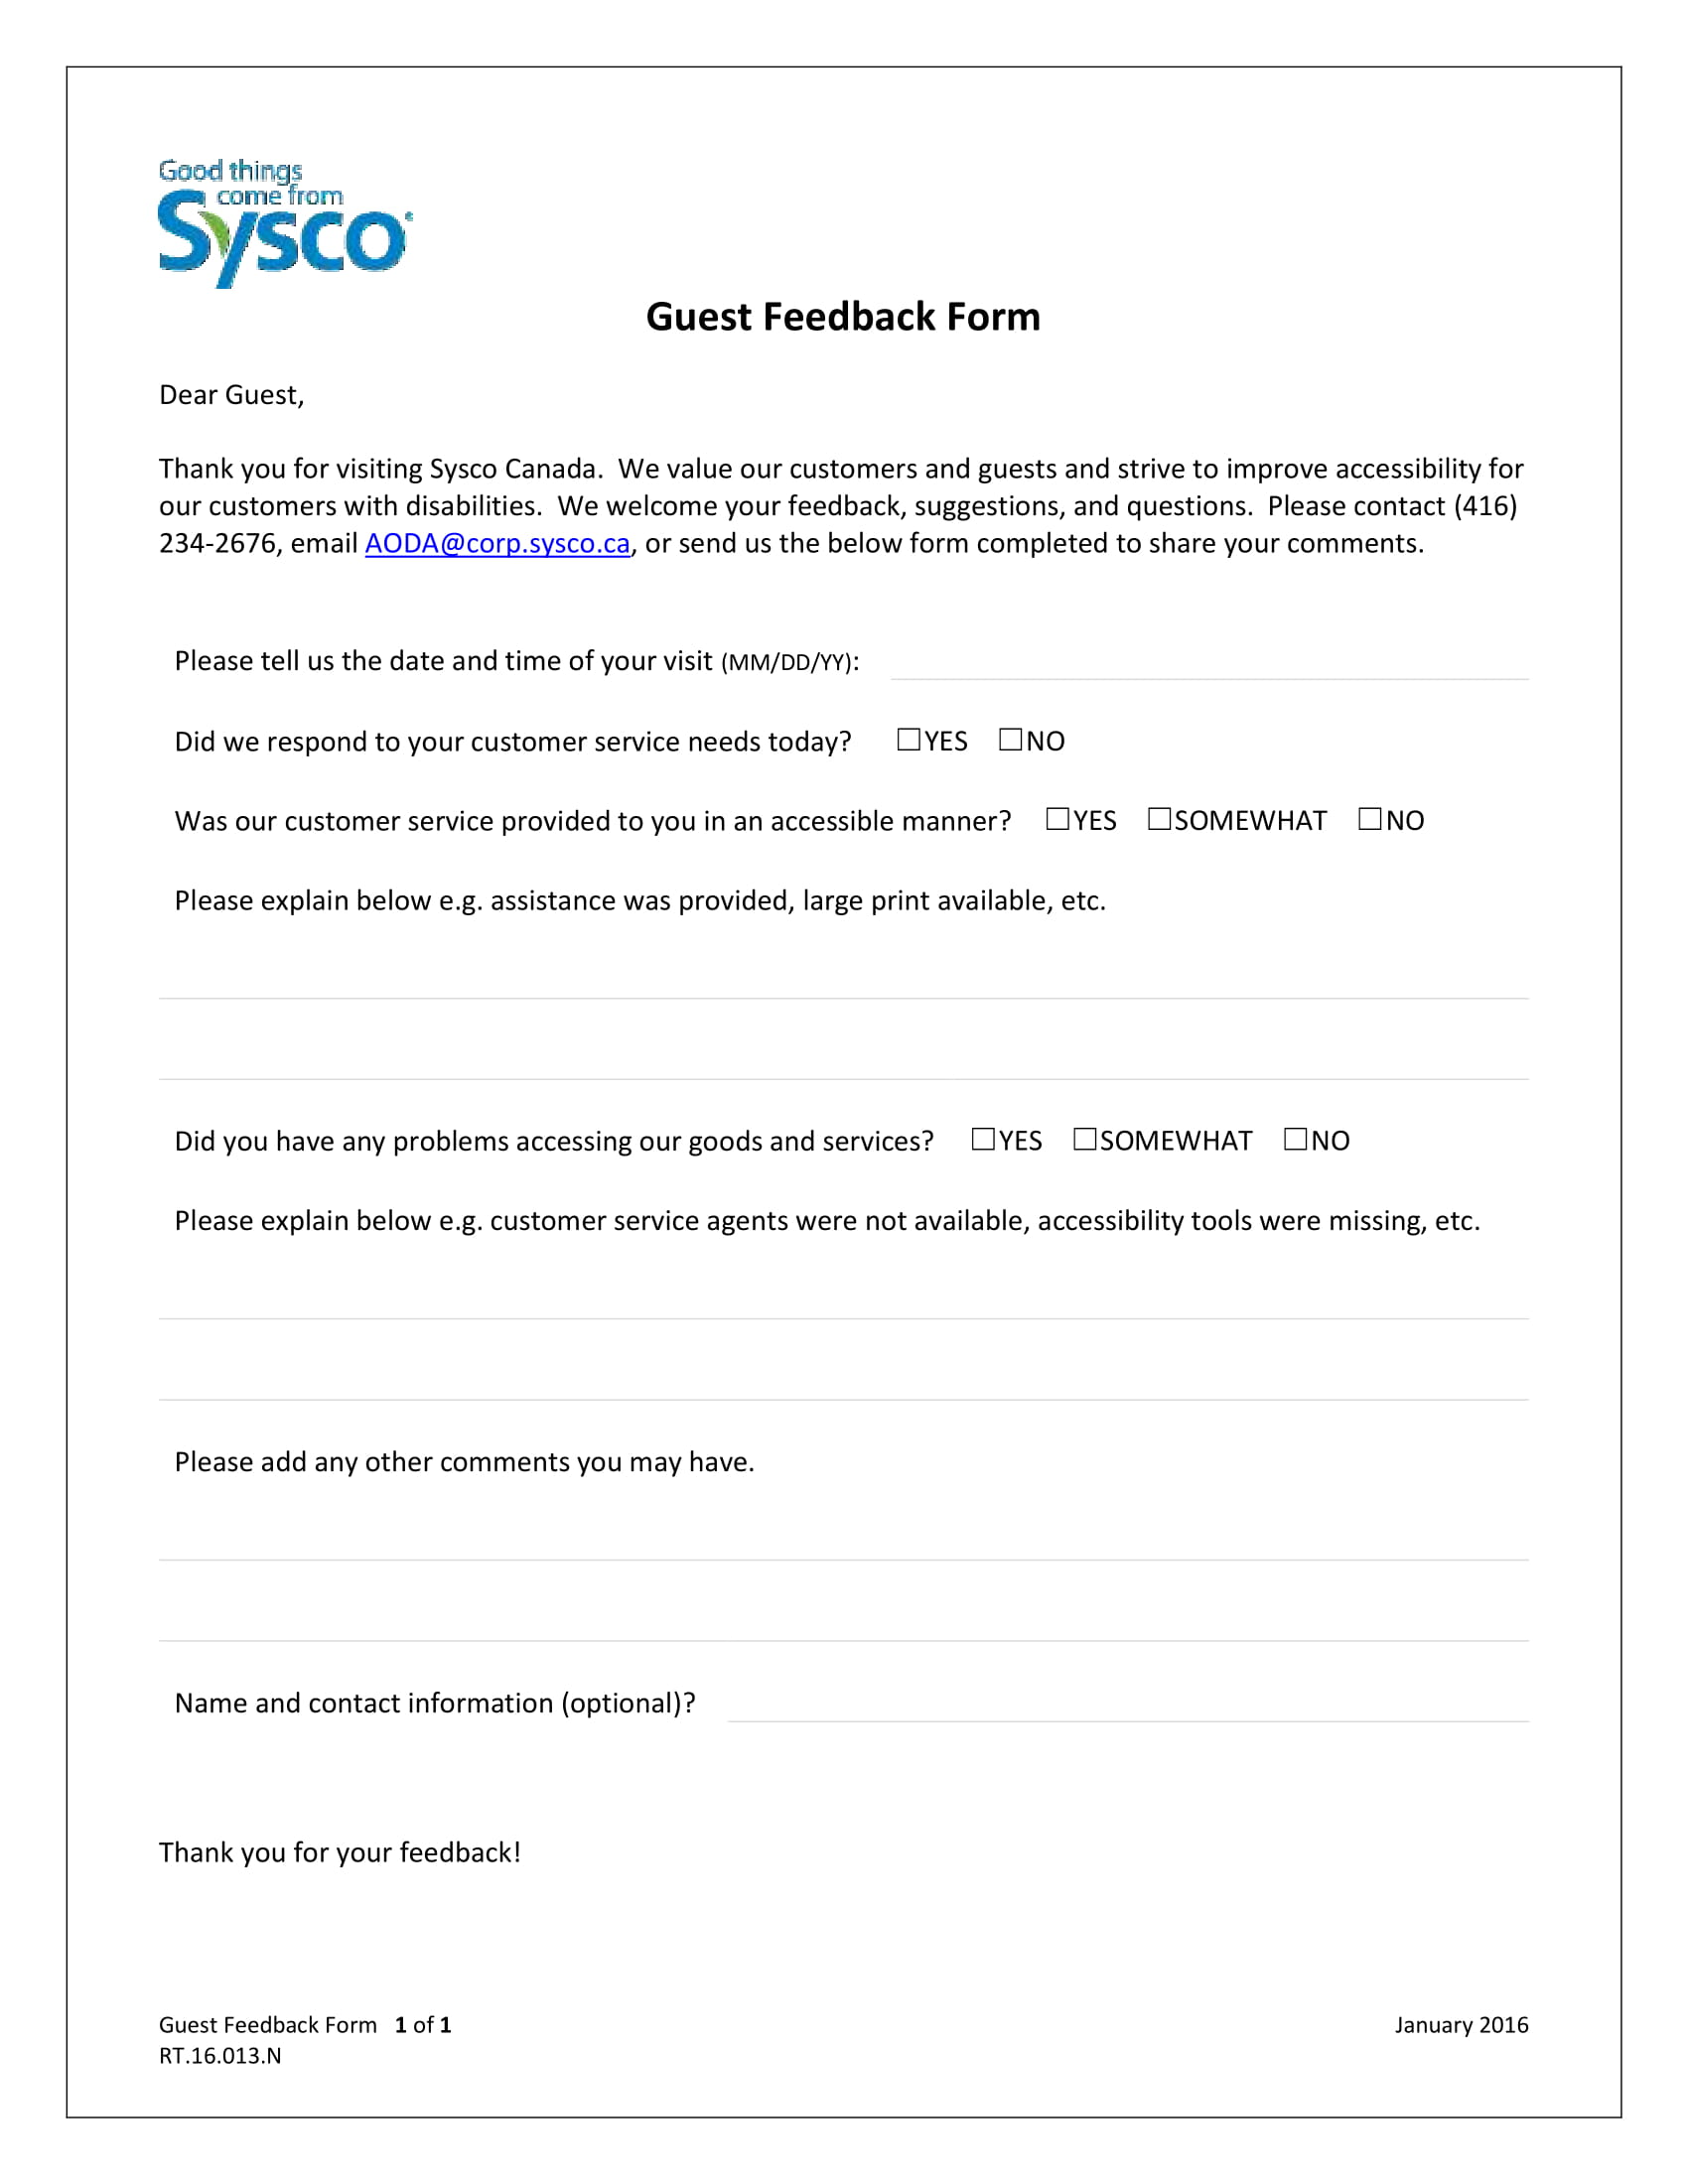 guest feedback form sample 1